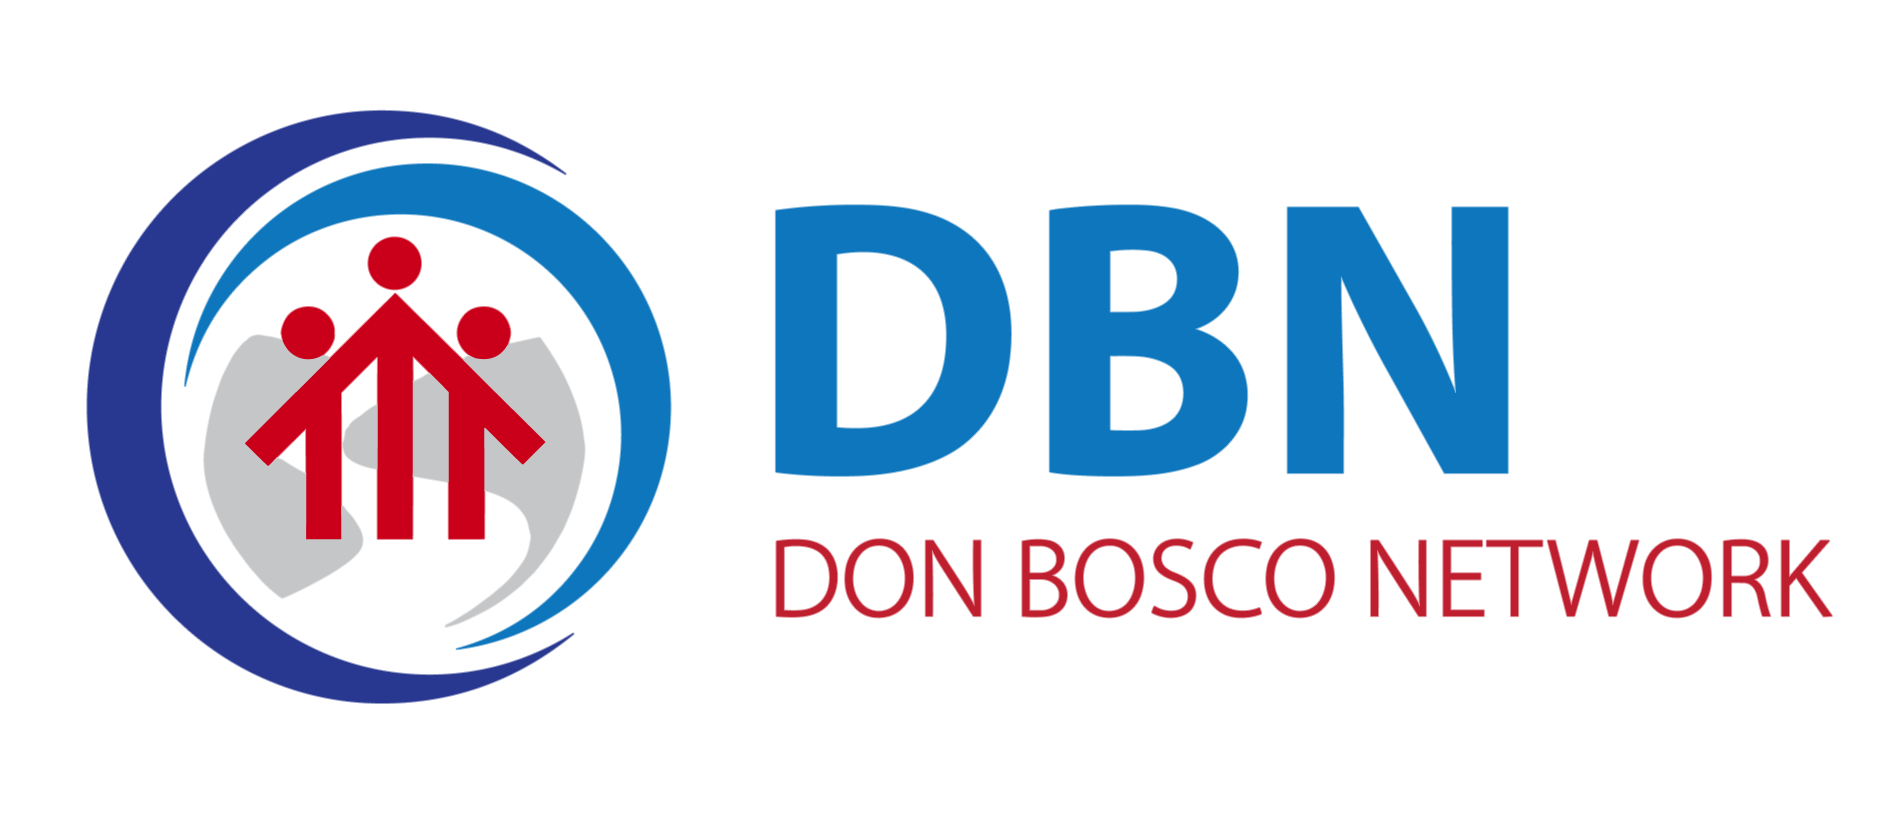 Don Bosco Network logo